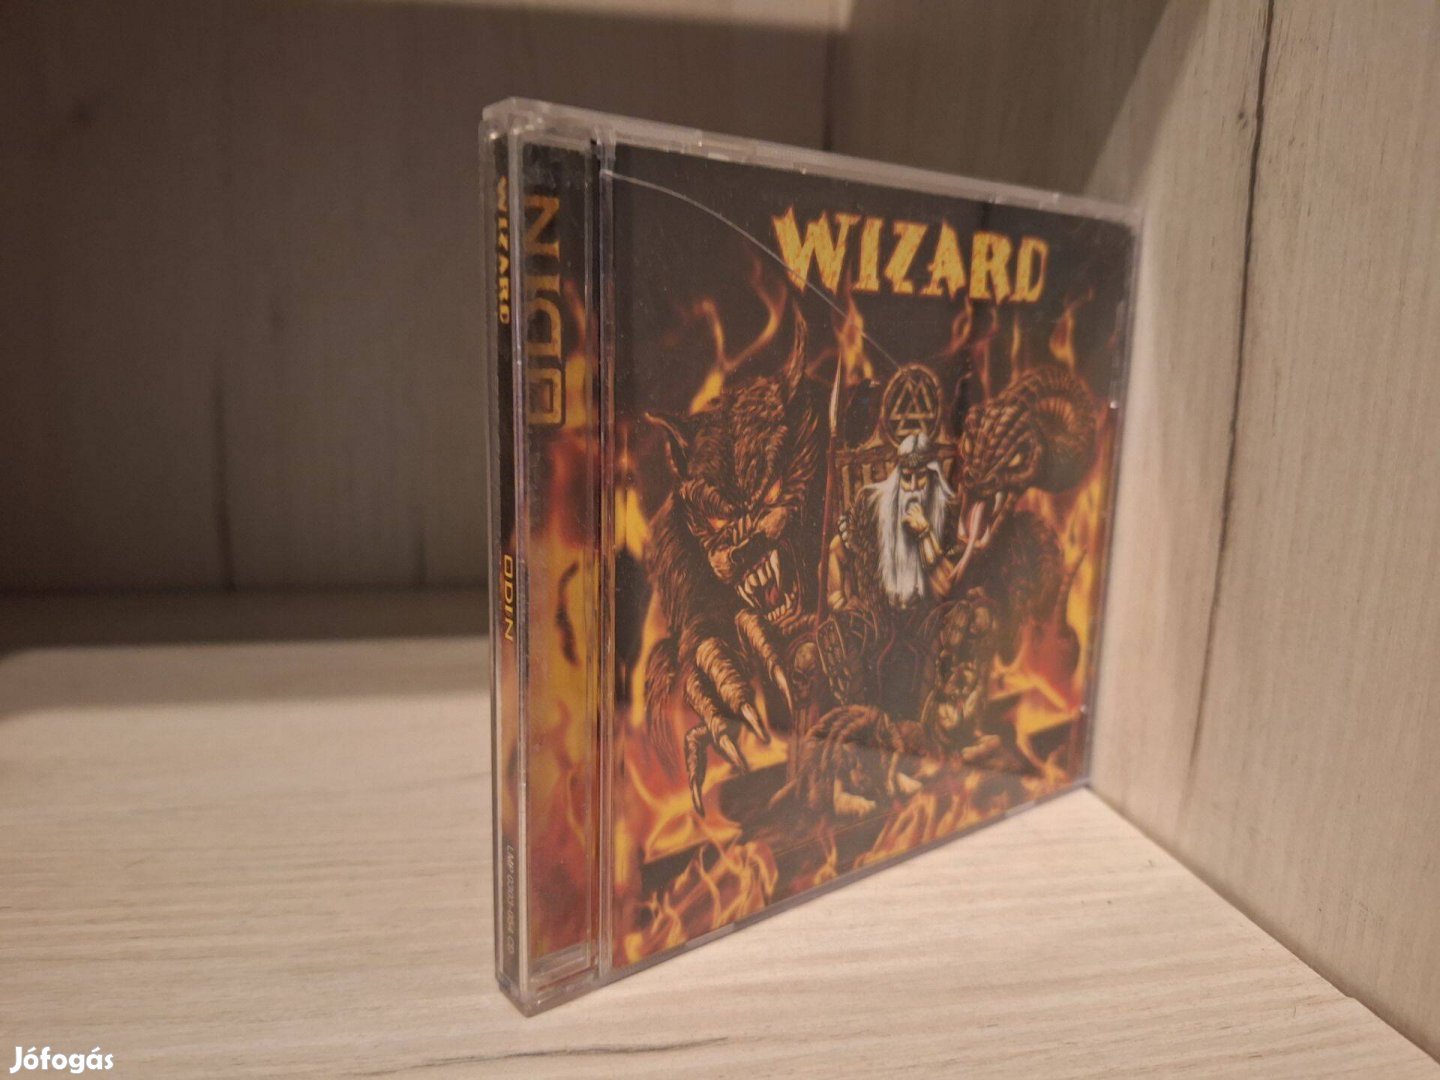 Wizard - Odin CD